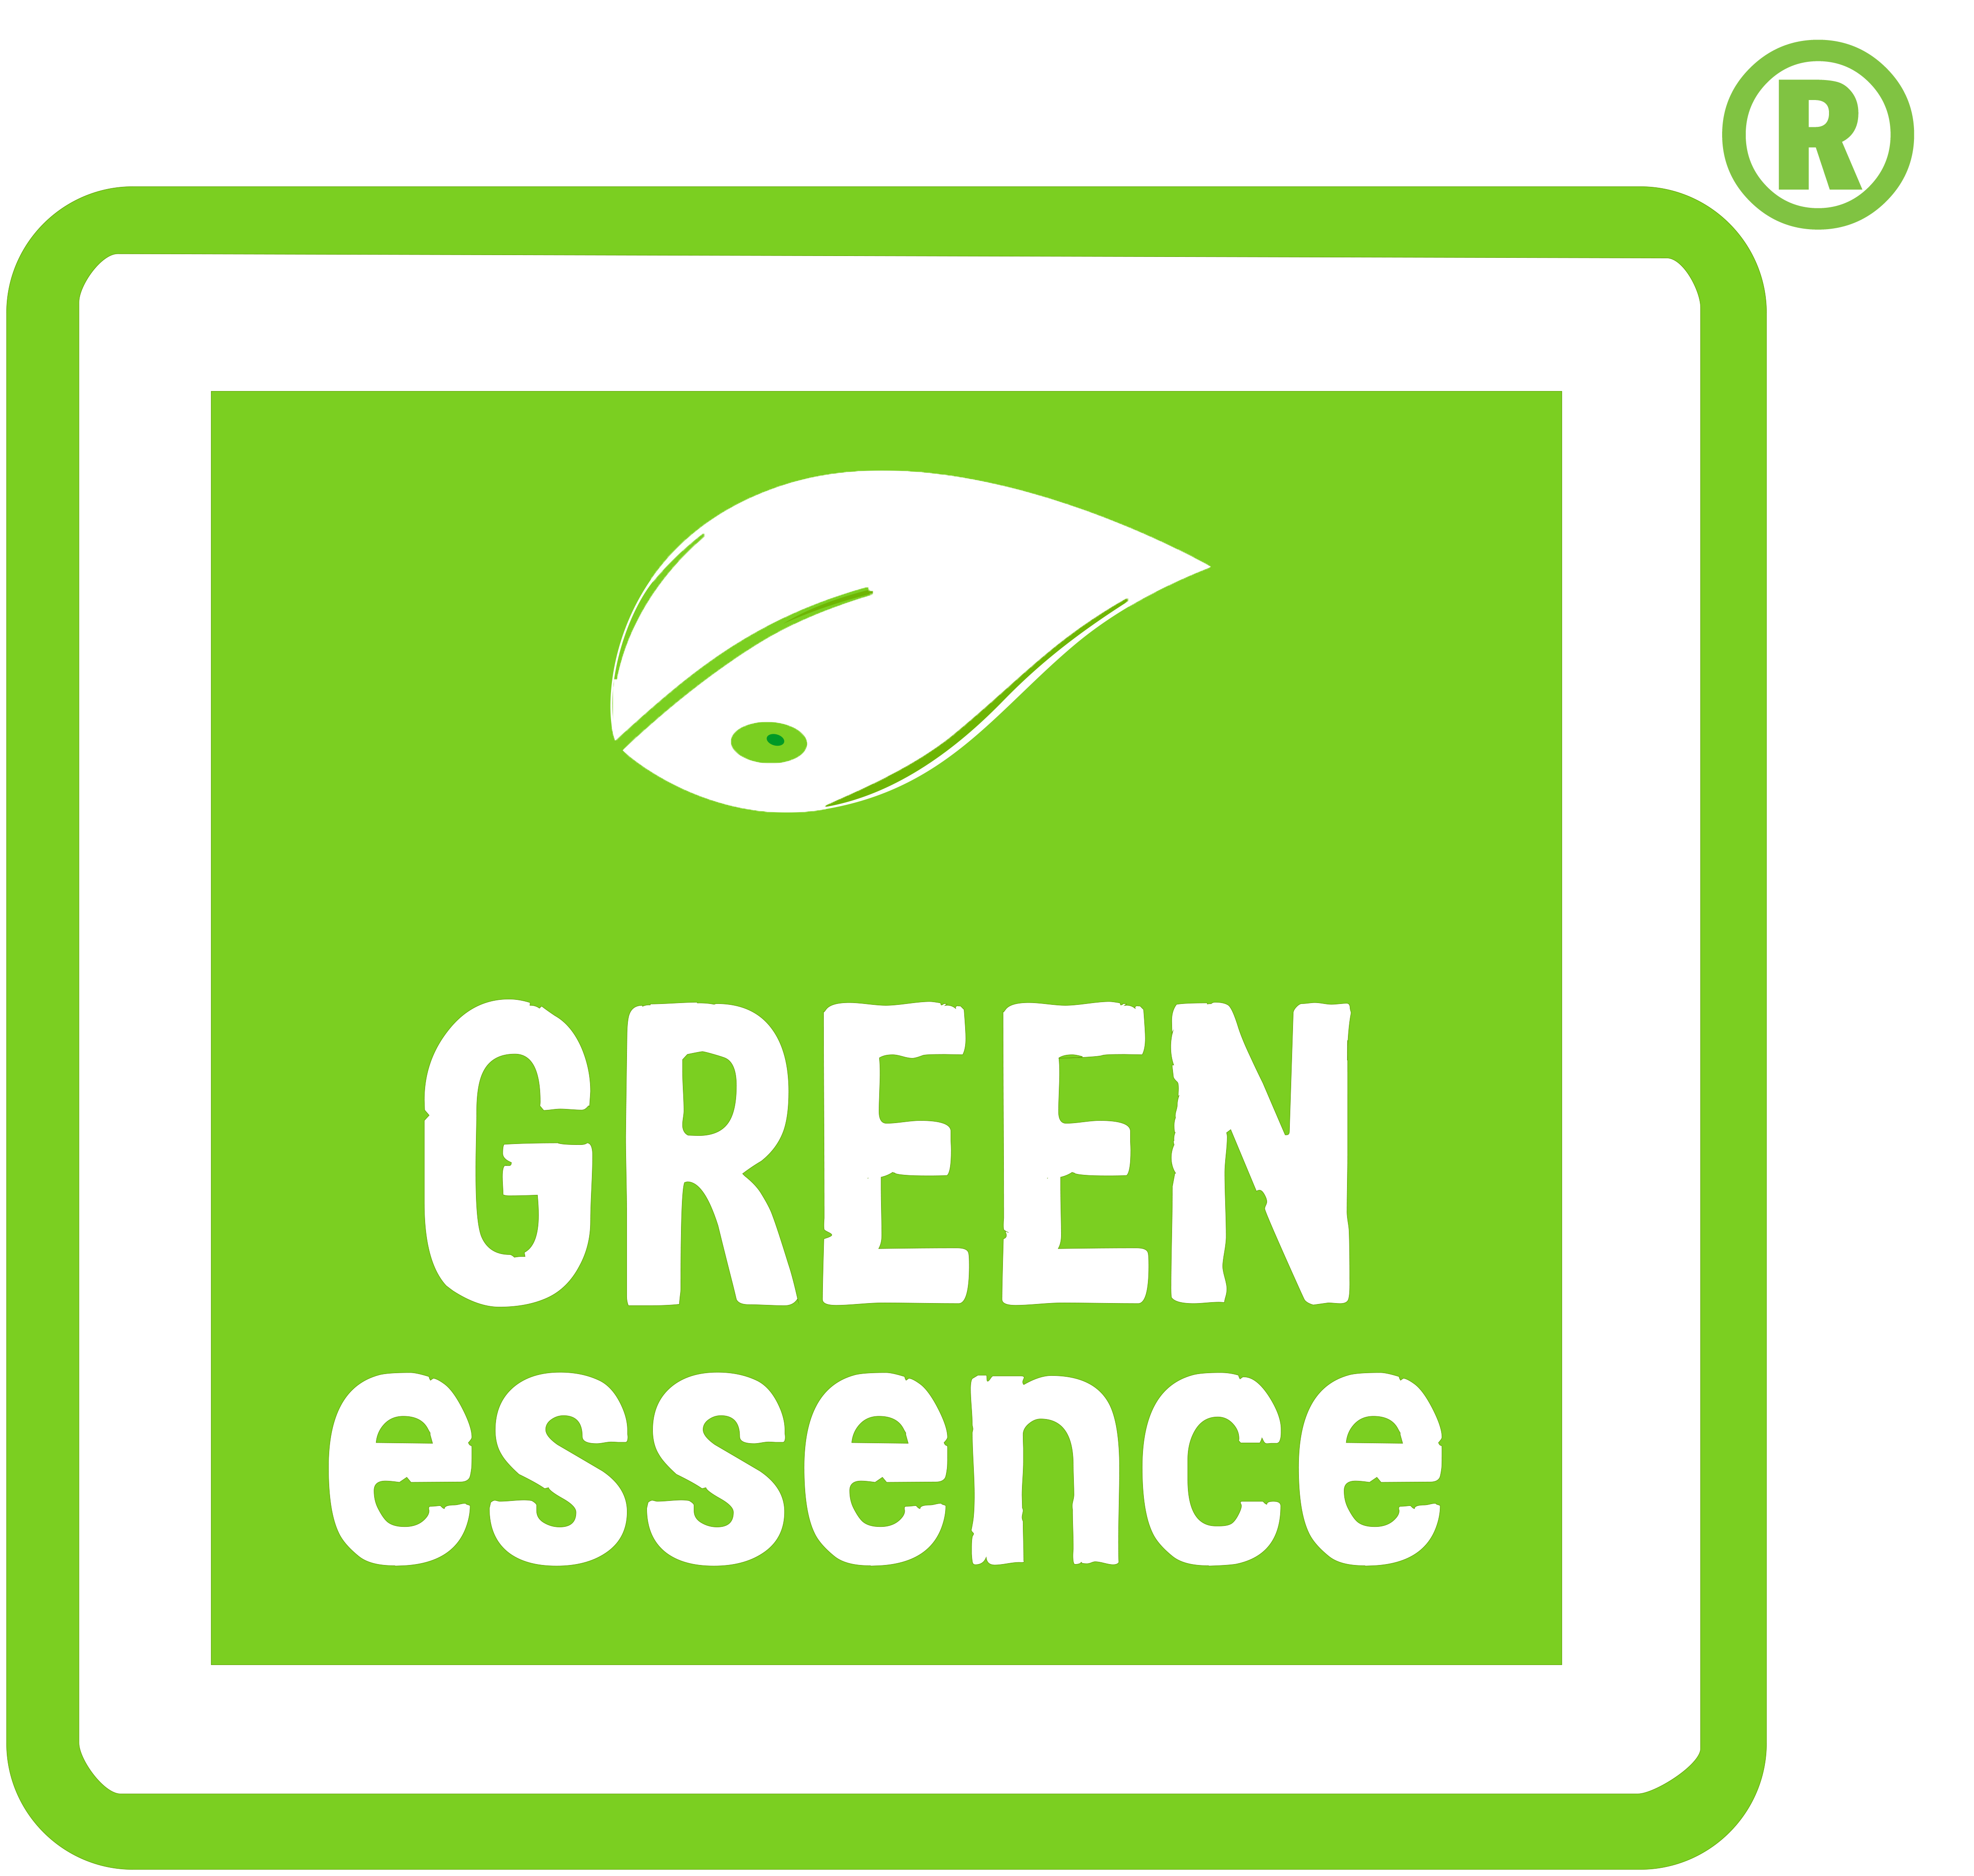 GREEN ESSENCE